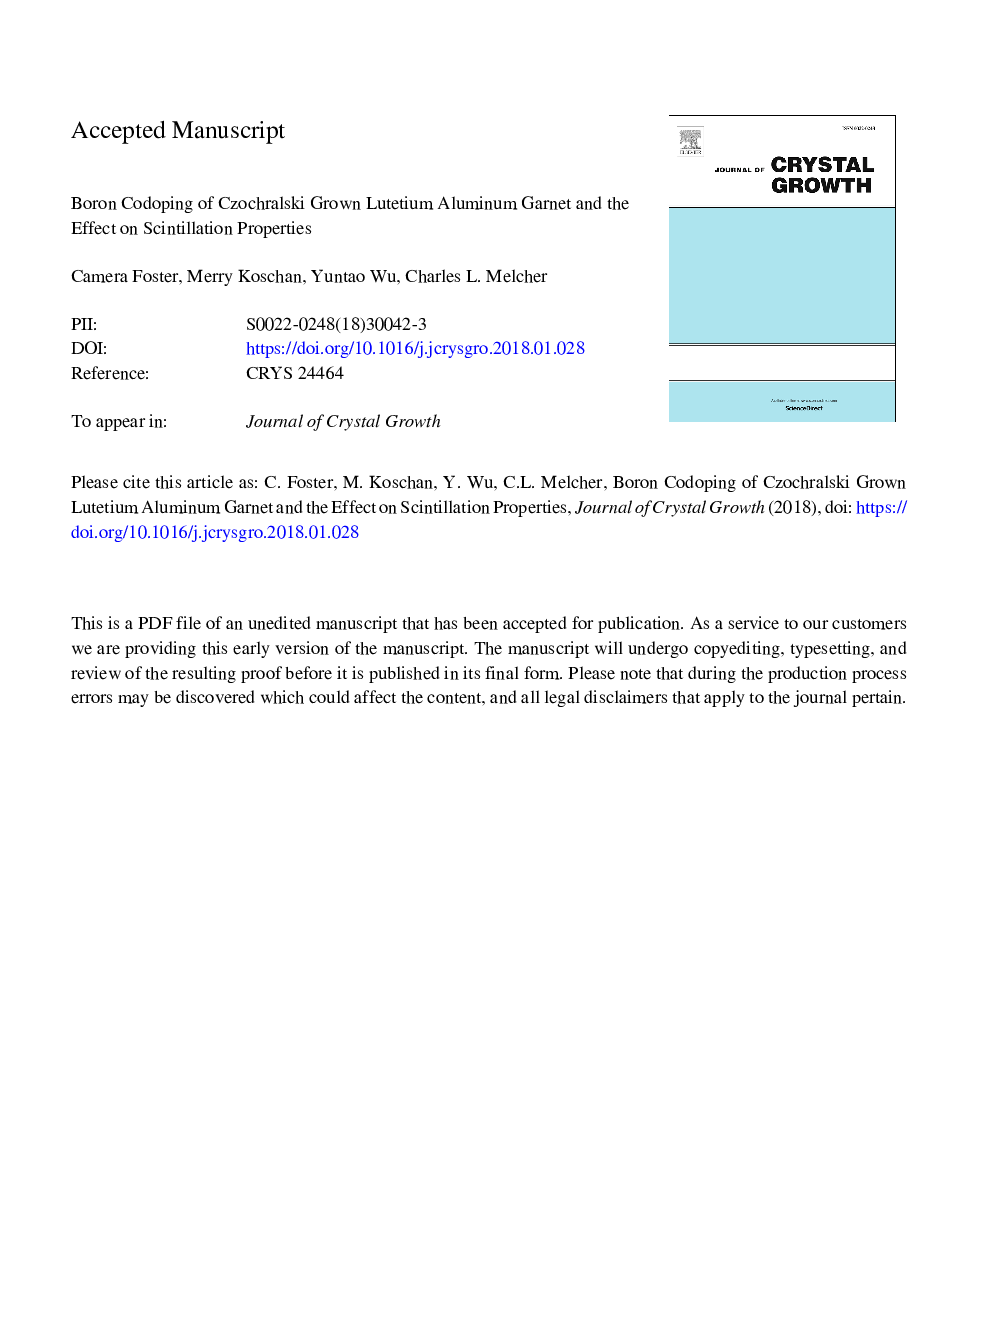 Boron codoping of Czochralski grown lutetium aluminum garnet and the effect on scintillation properties